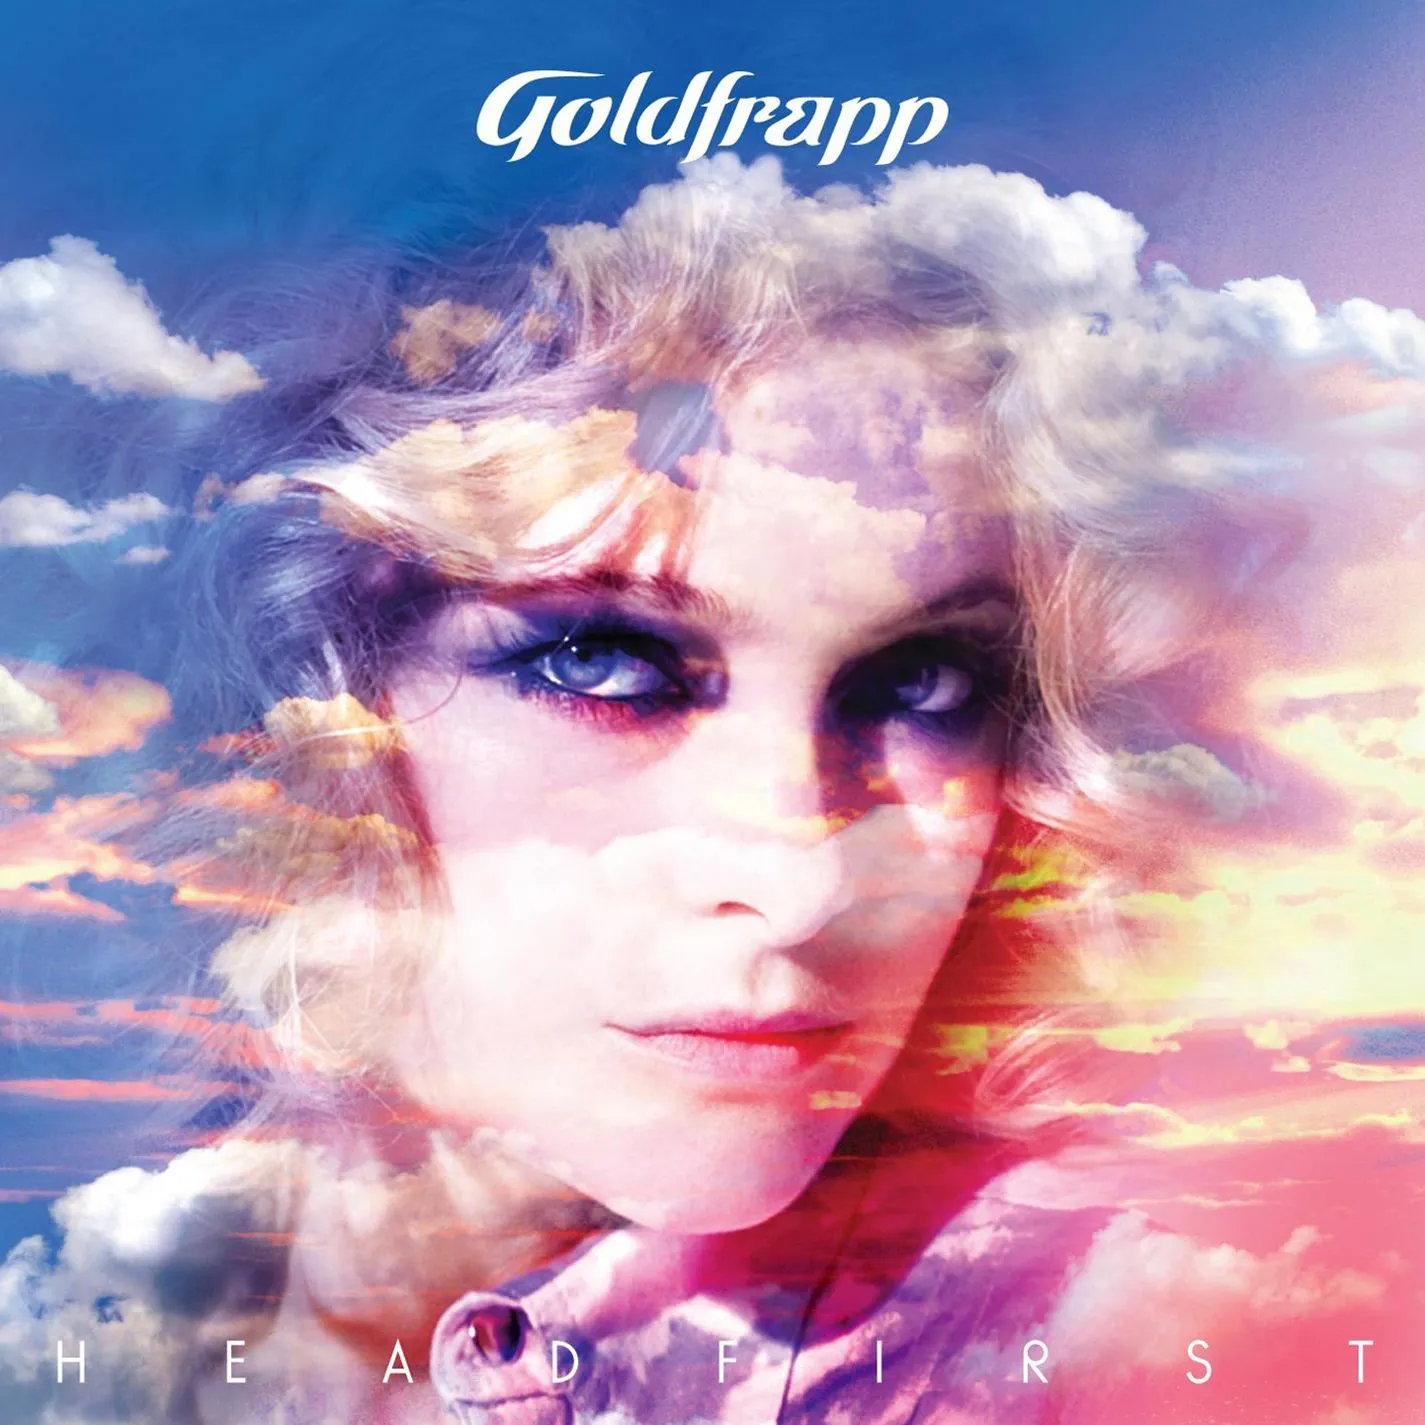 Goldfrapp - Head First artwork